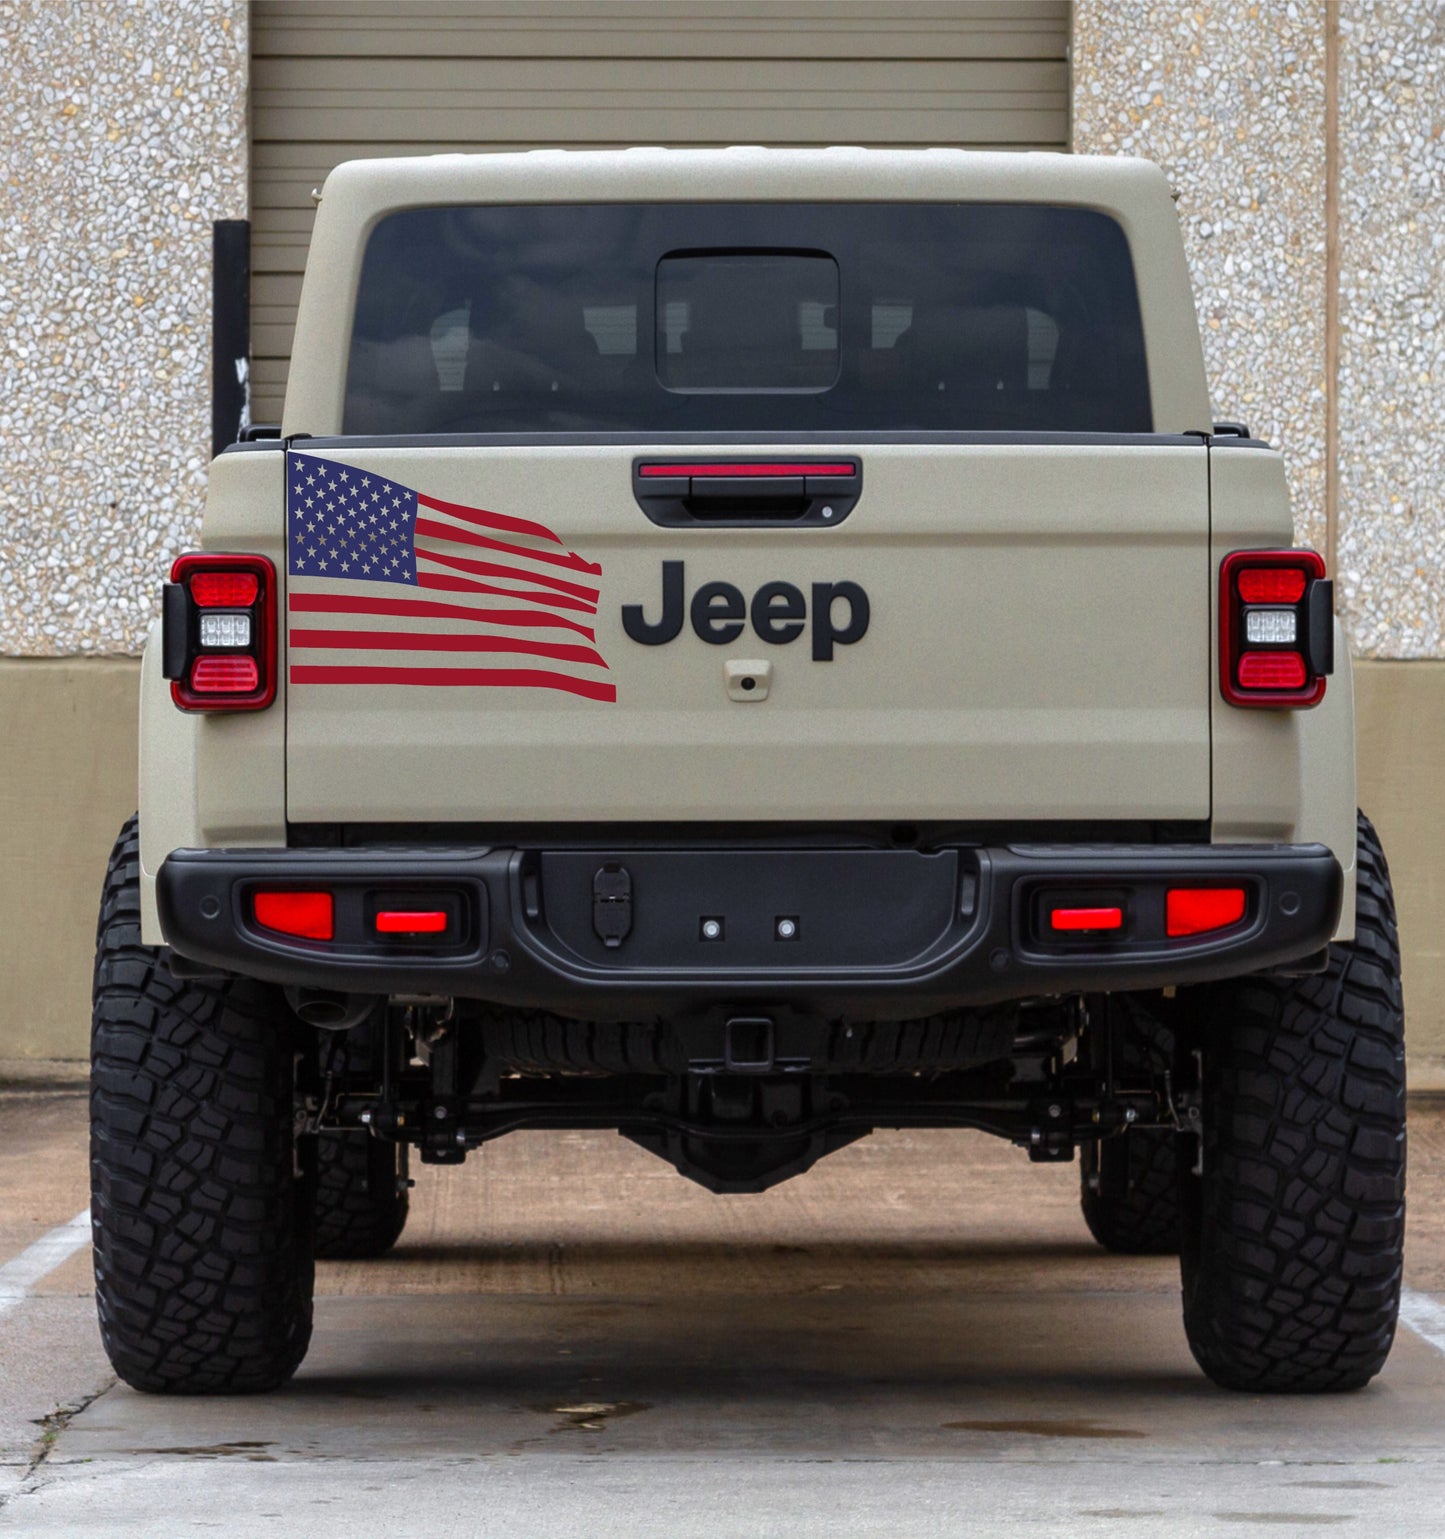 American Flag Waving Patriotic decal for Jeep GLadiators, trucks, Vans